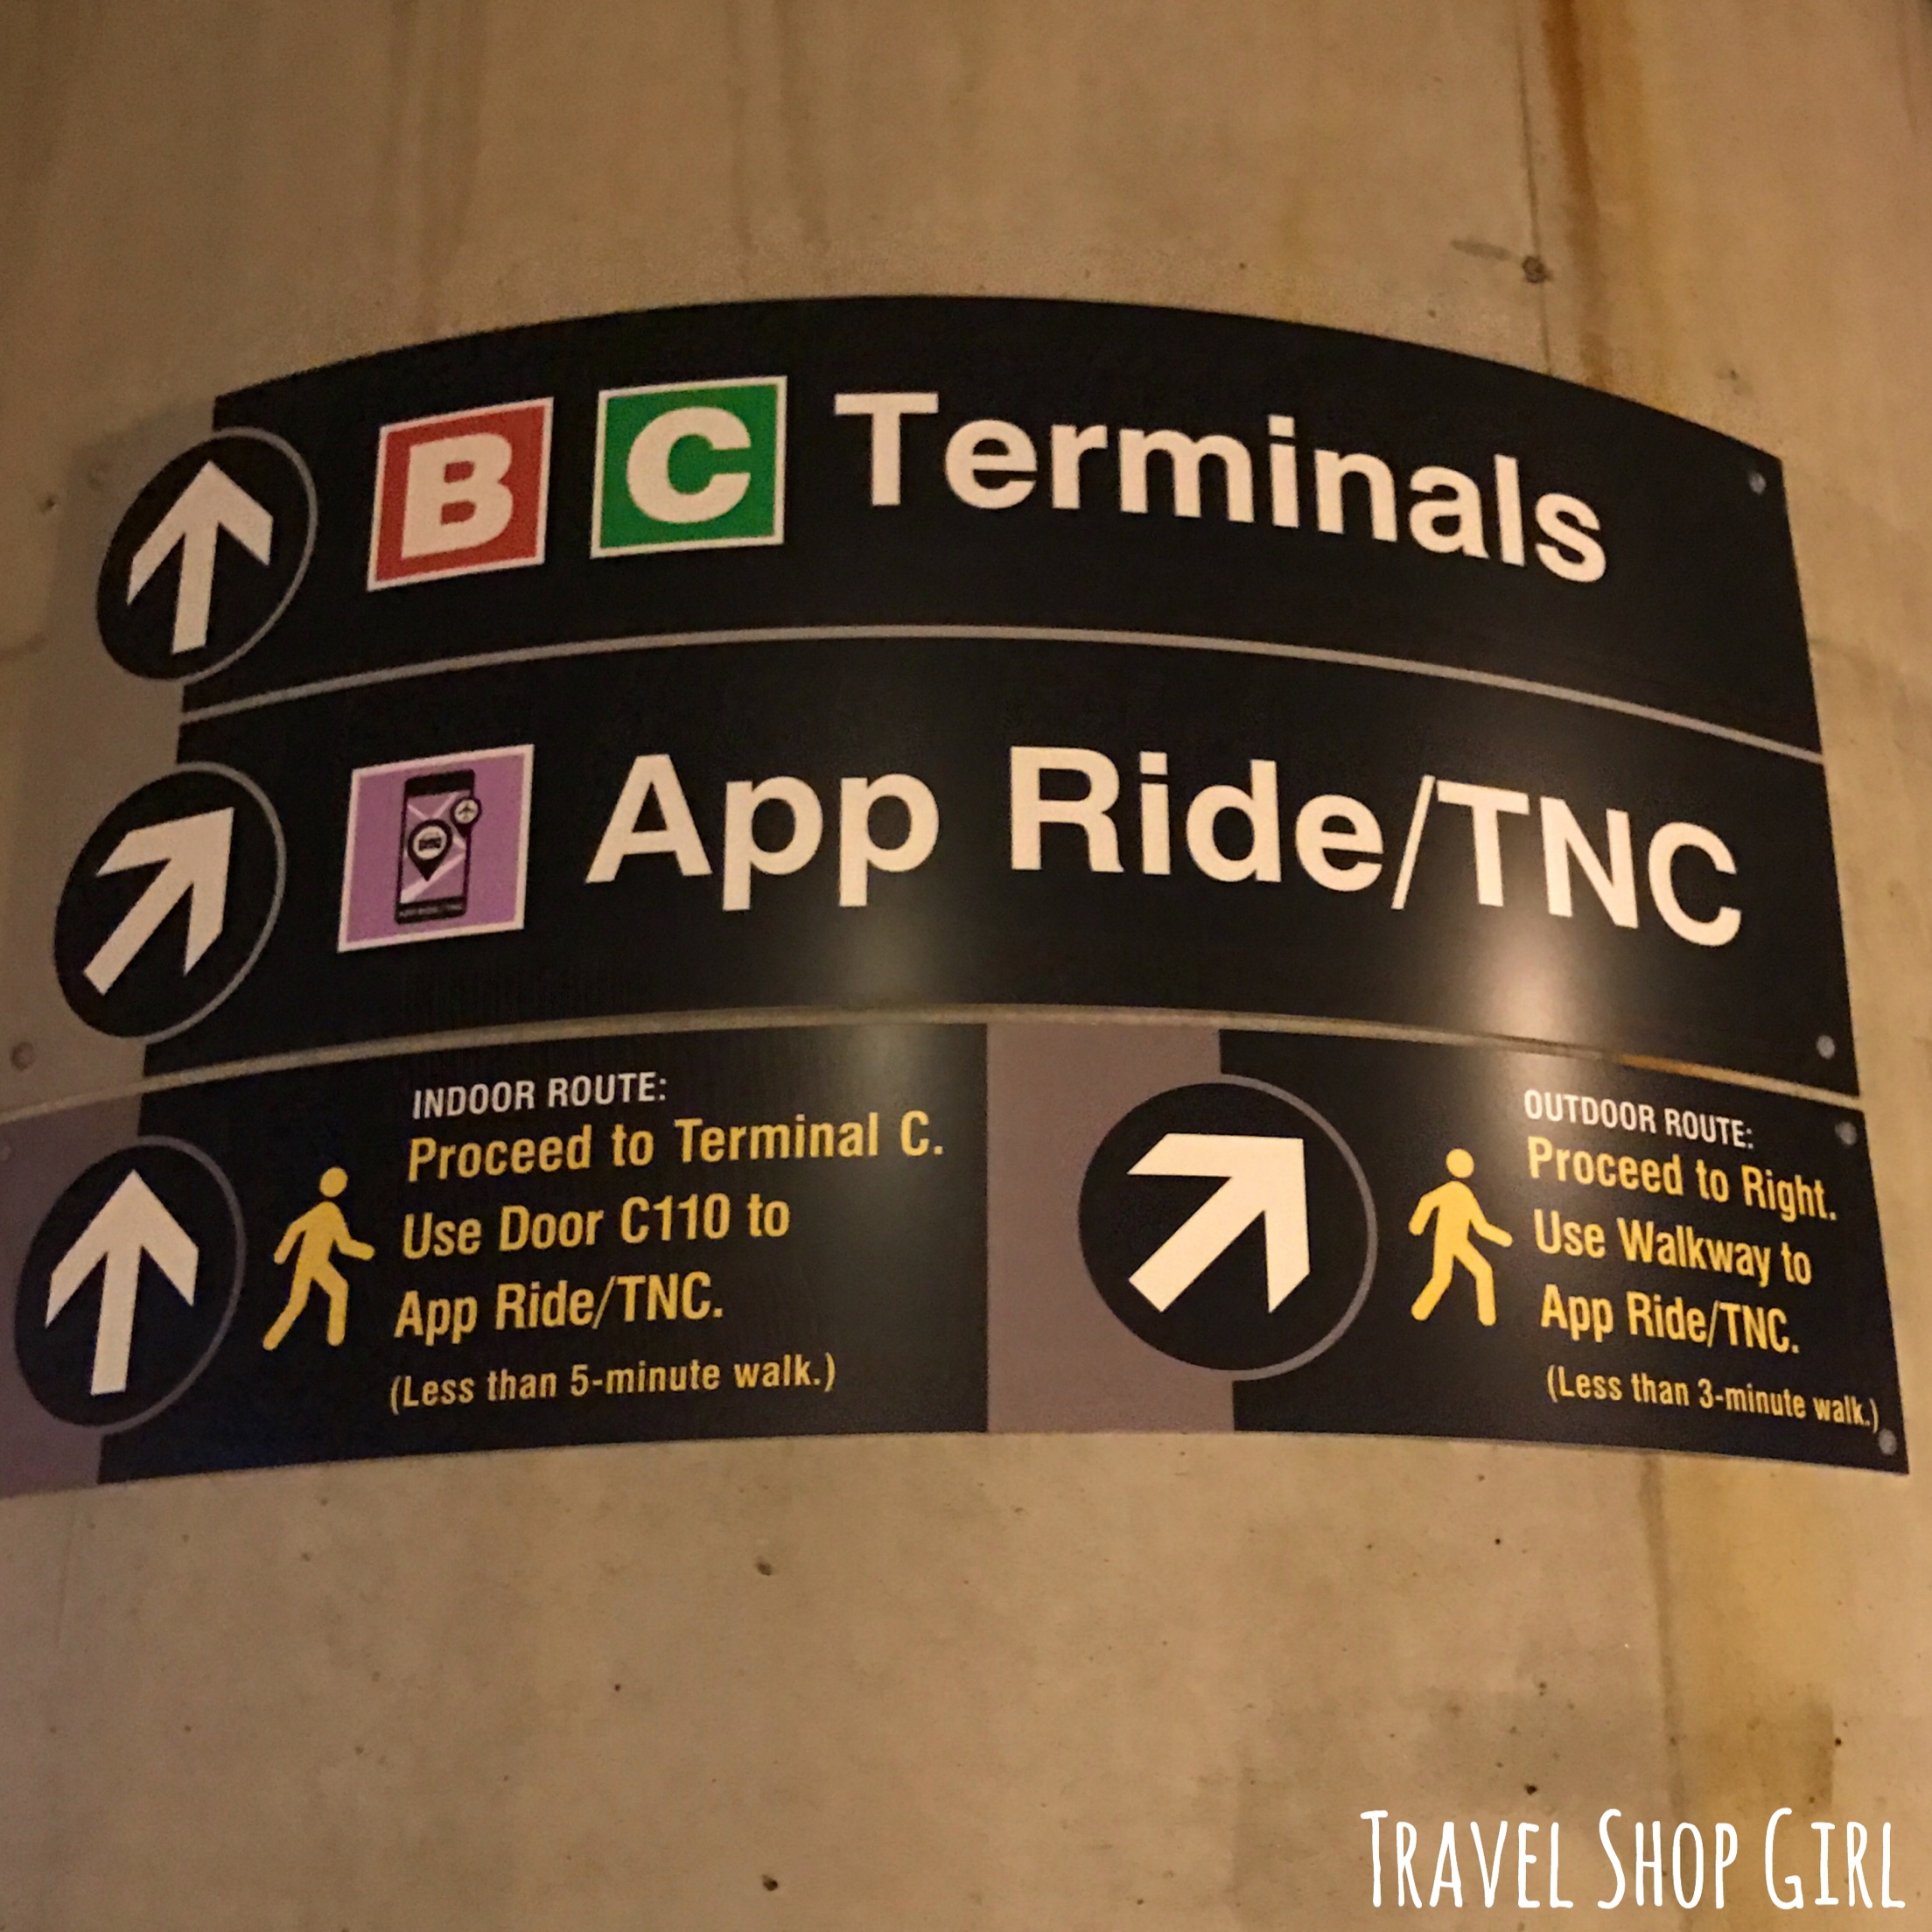 Uber Airport Pickup from Boston Logan International Airport | Travel Shop Girl